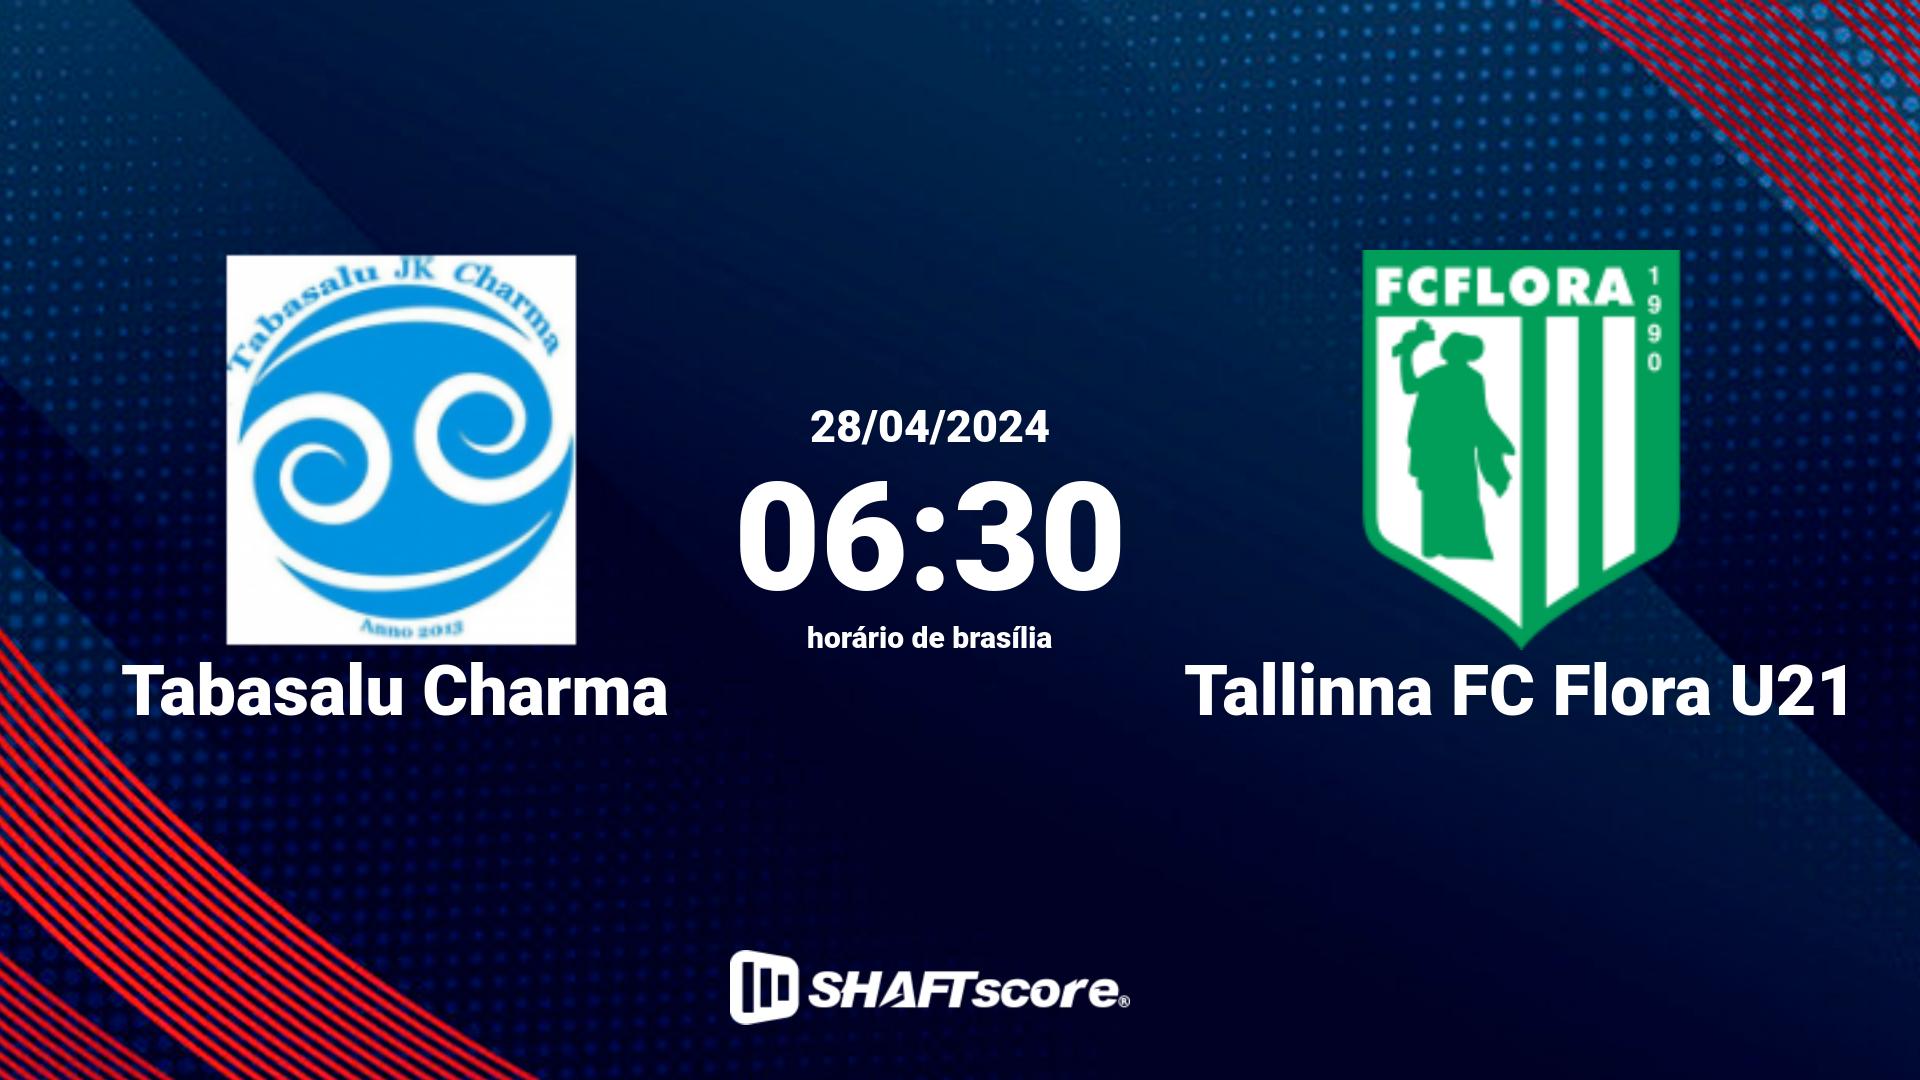 Estatísticas do jogo Tabasalu Charma vs Tallinna FC Flora U21 28.04 06:30